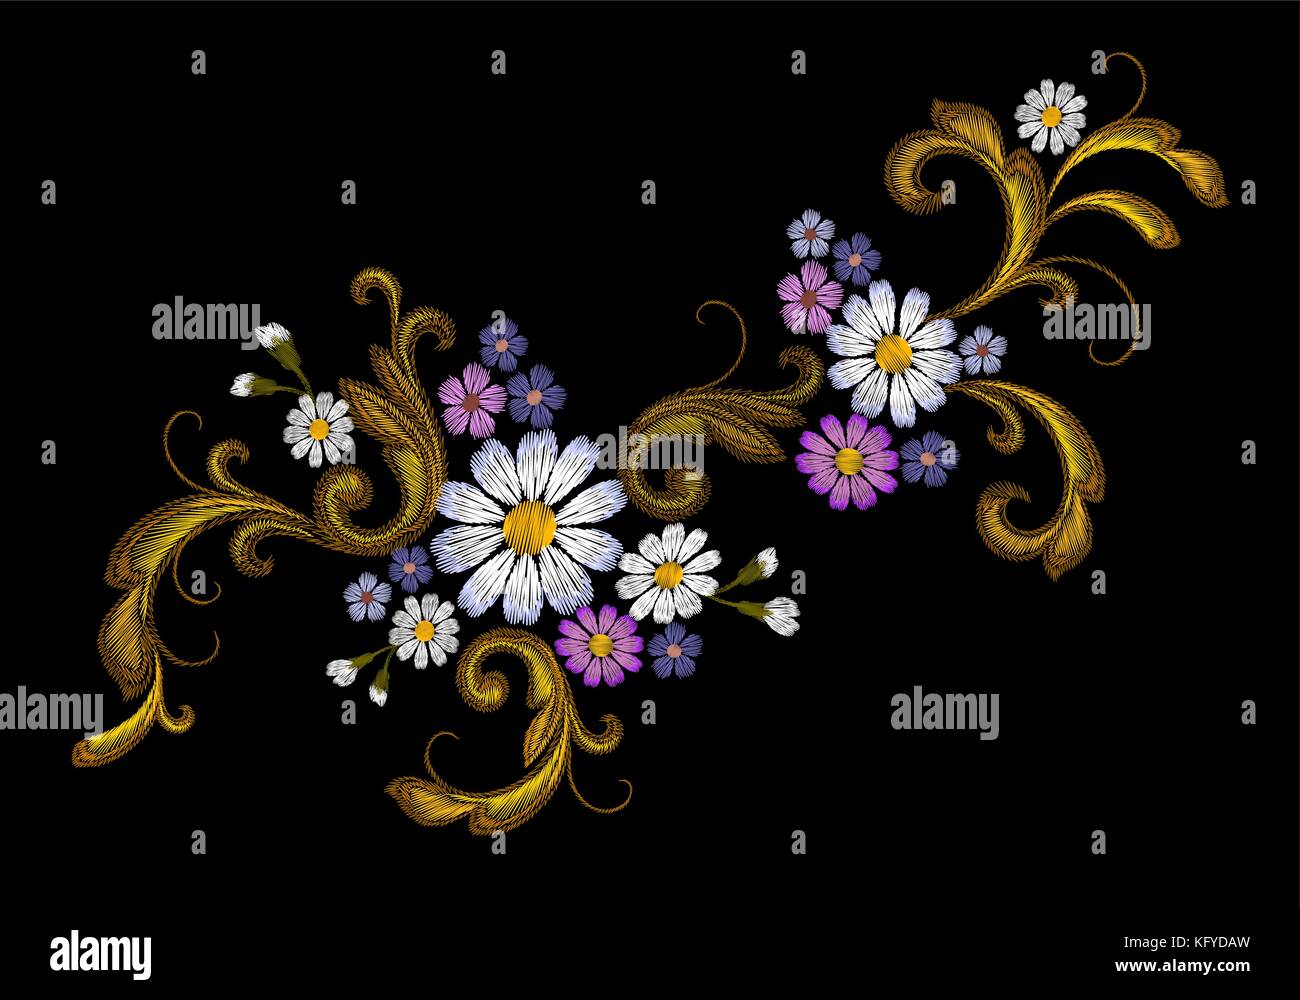 Realistic vector embroidery fashion patch. Flower daisy golden leaves vintage victorian design. Stitch texture floral arrangement clothes decoration illustration Stock Vector